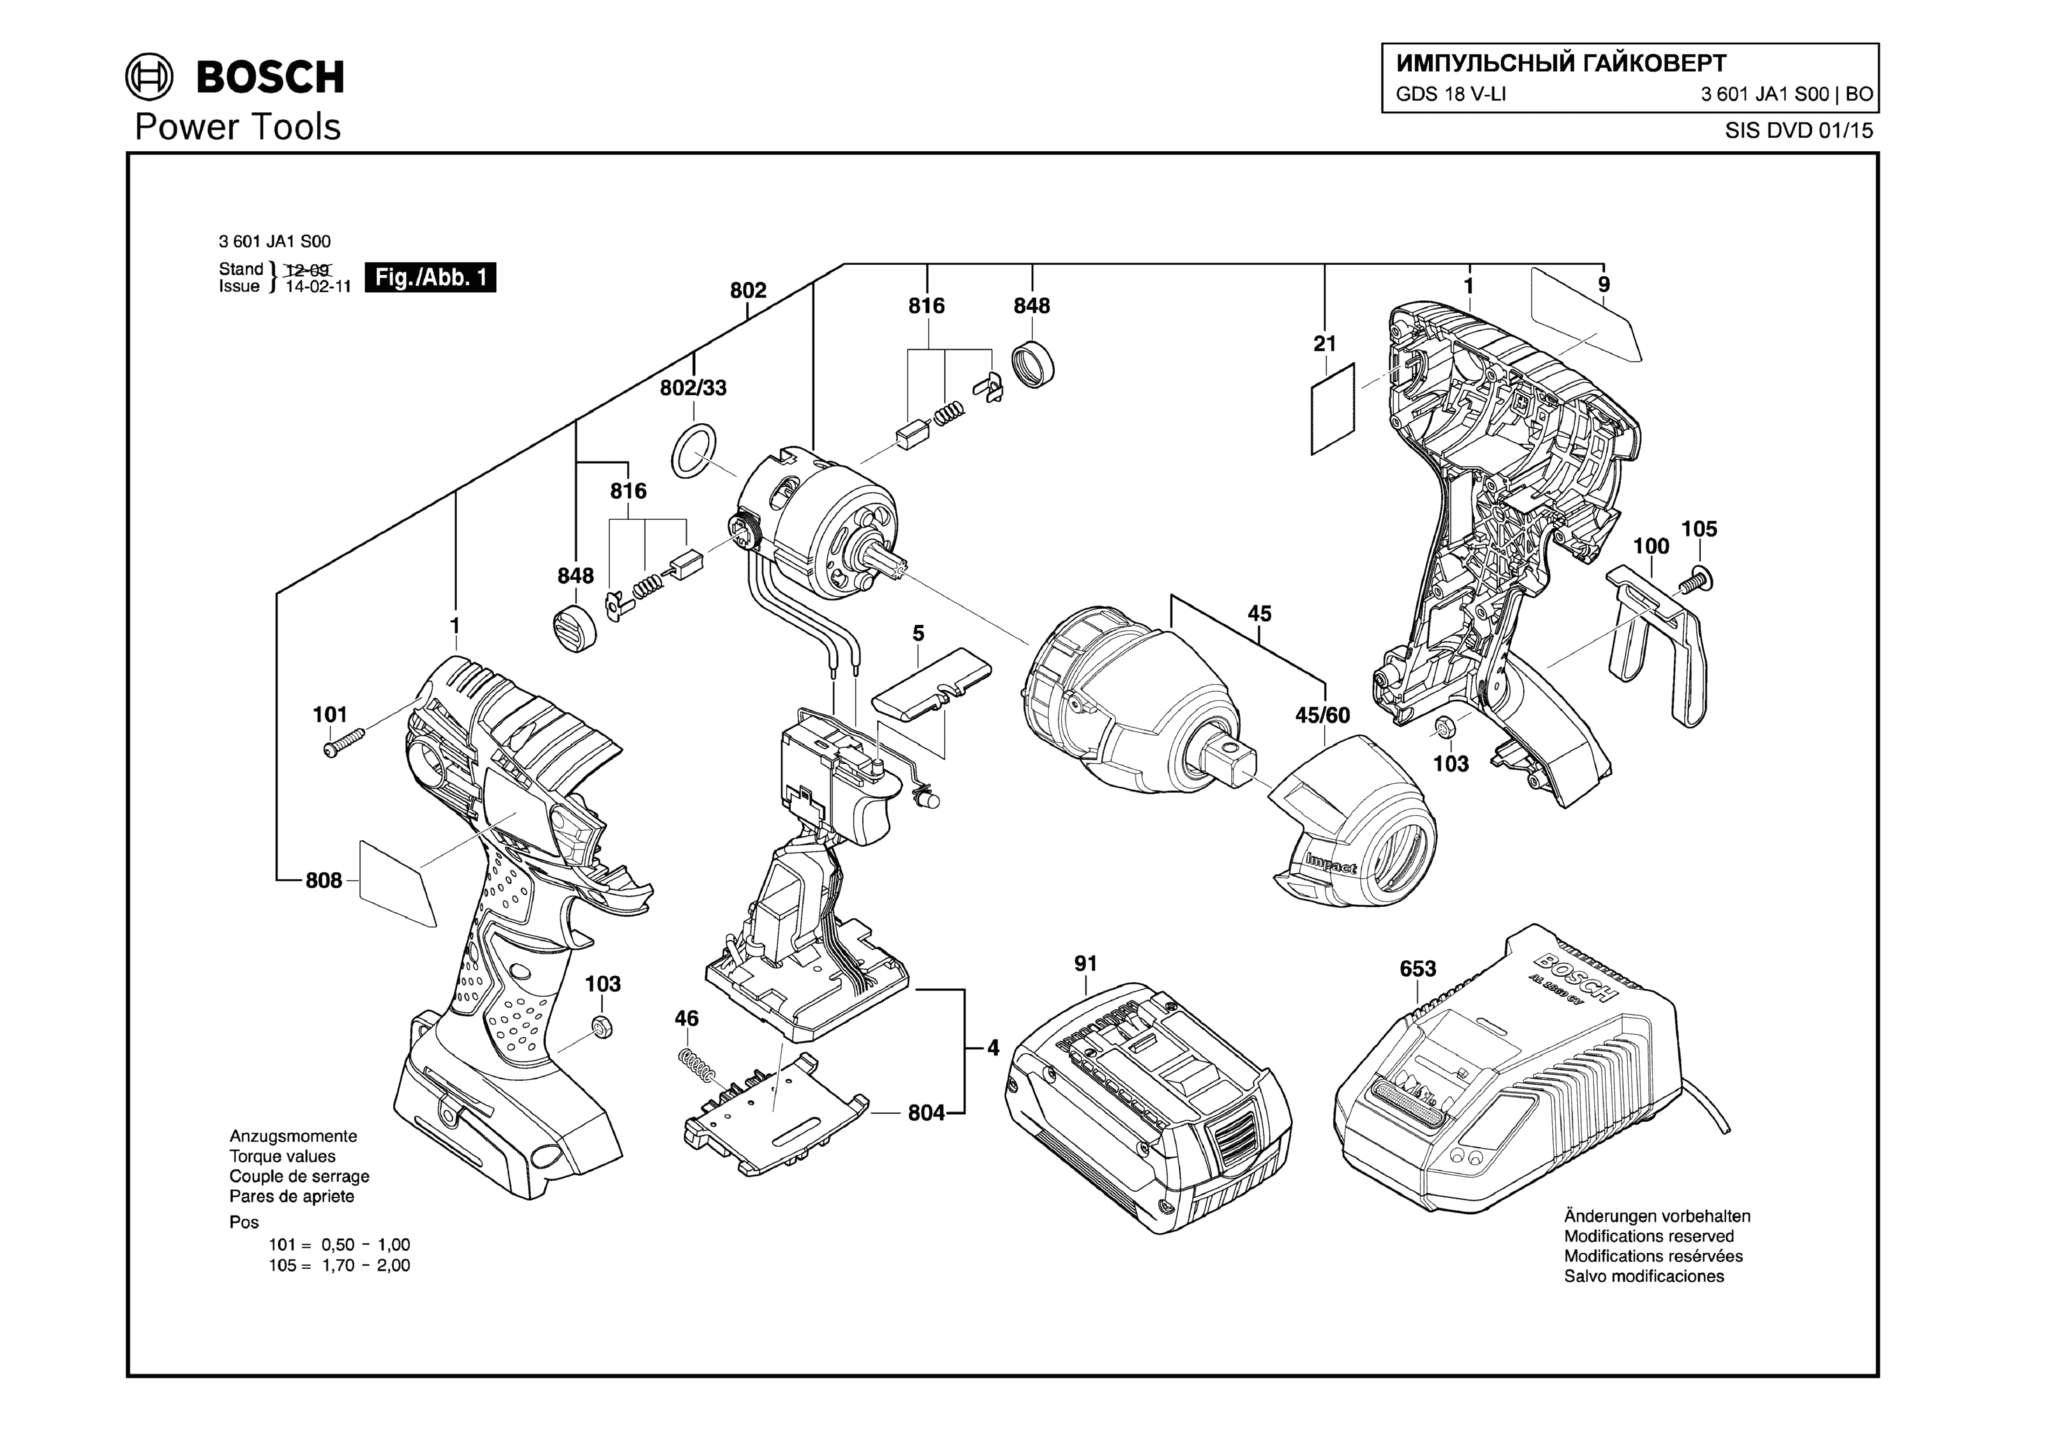 Запчасти, схема и деталировка Bosch GDS 18 V-LI (ТИП 3601JA1S00)